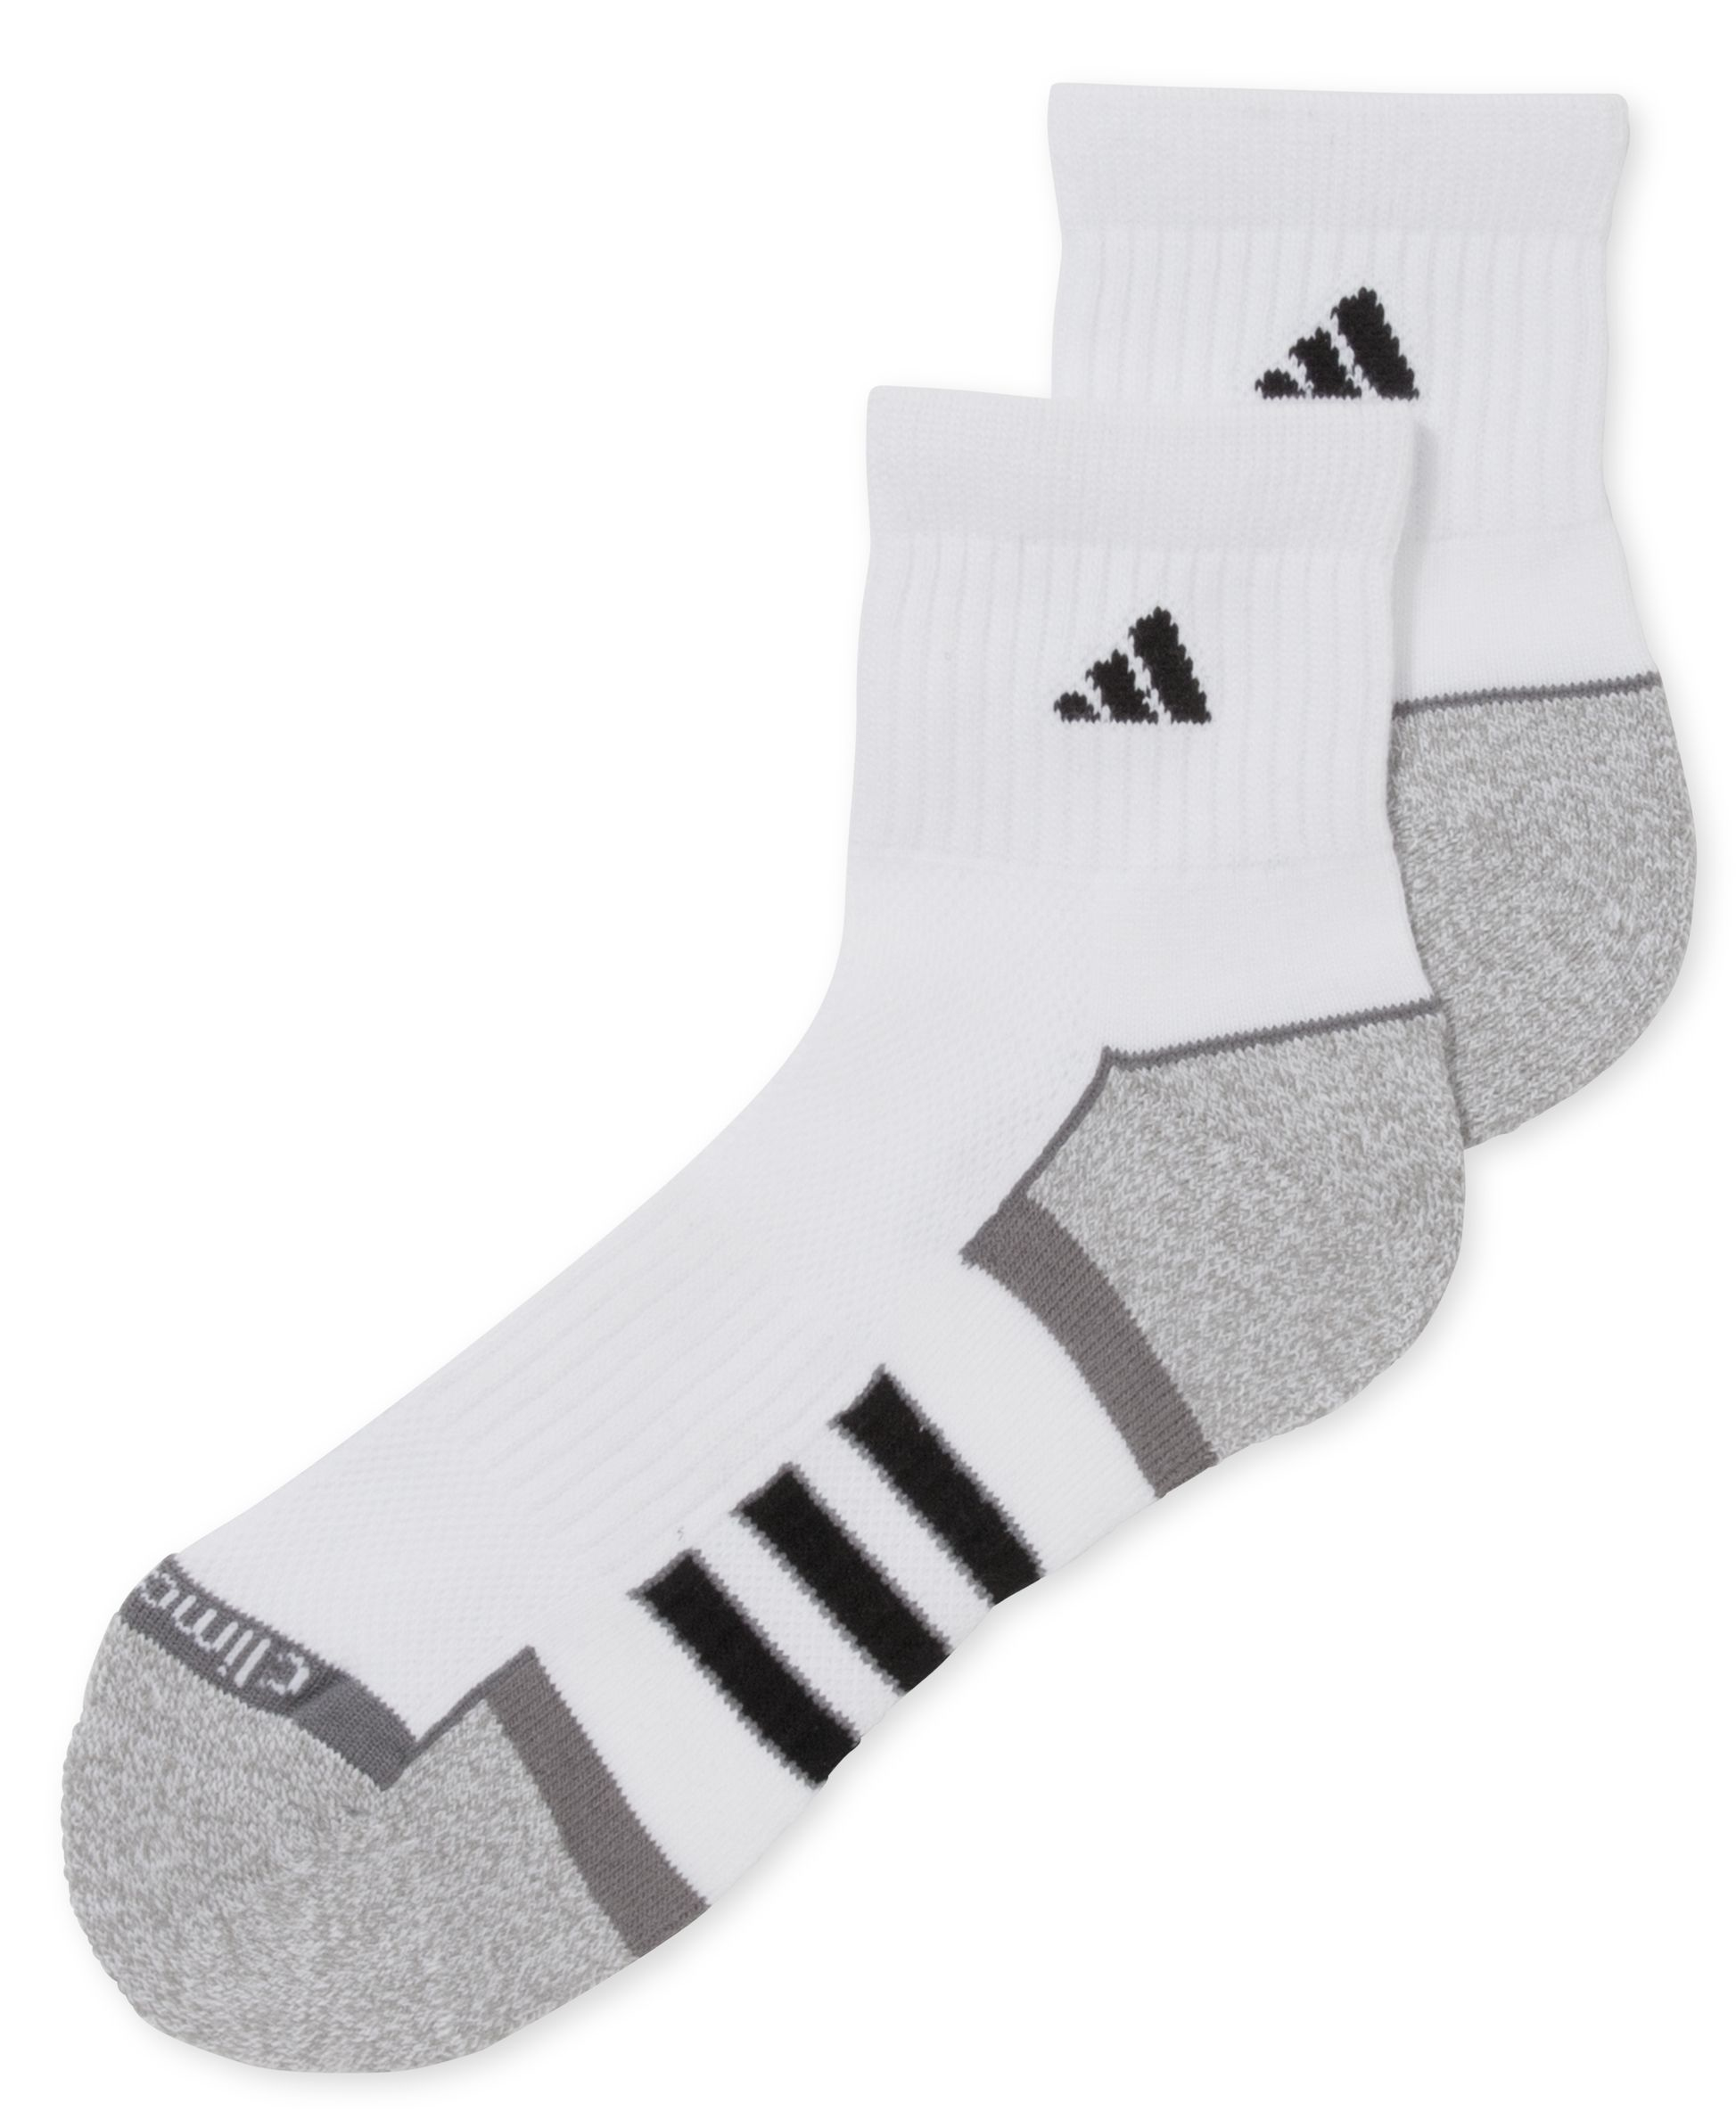 Adidas originals Men's Climalite Ii Quarter-length Socks 2-pack in ...